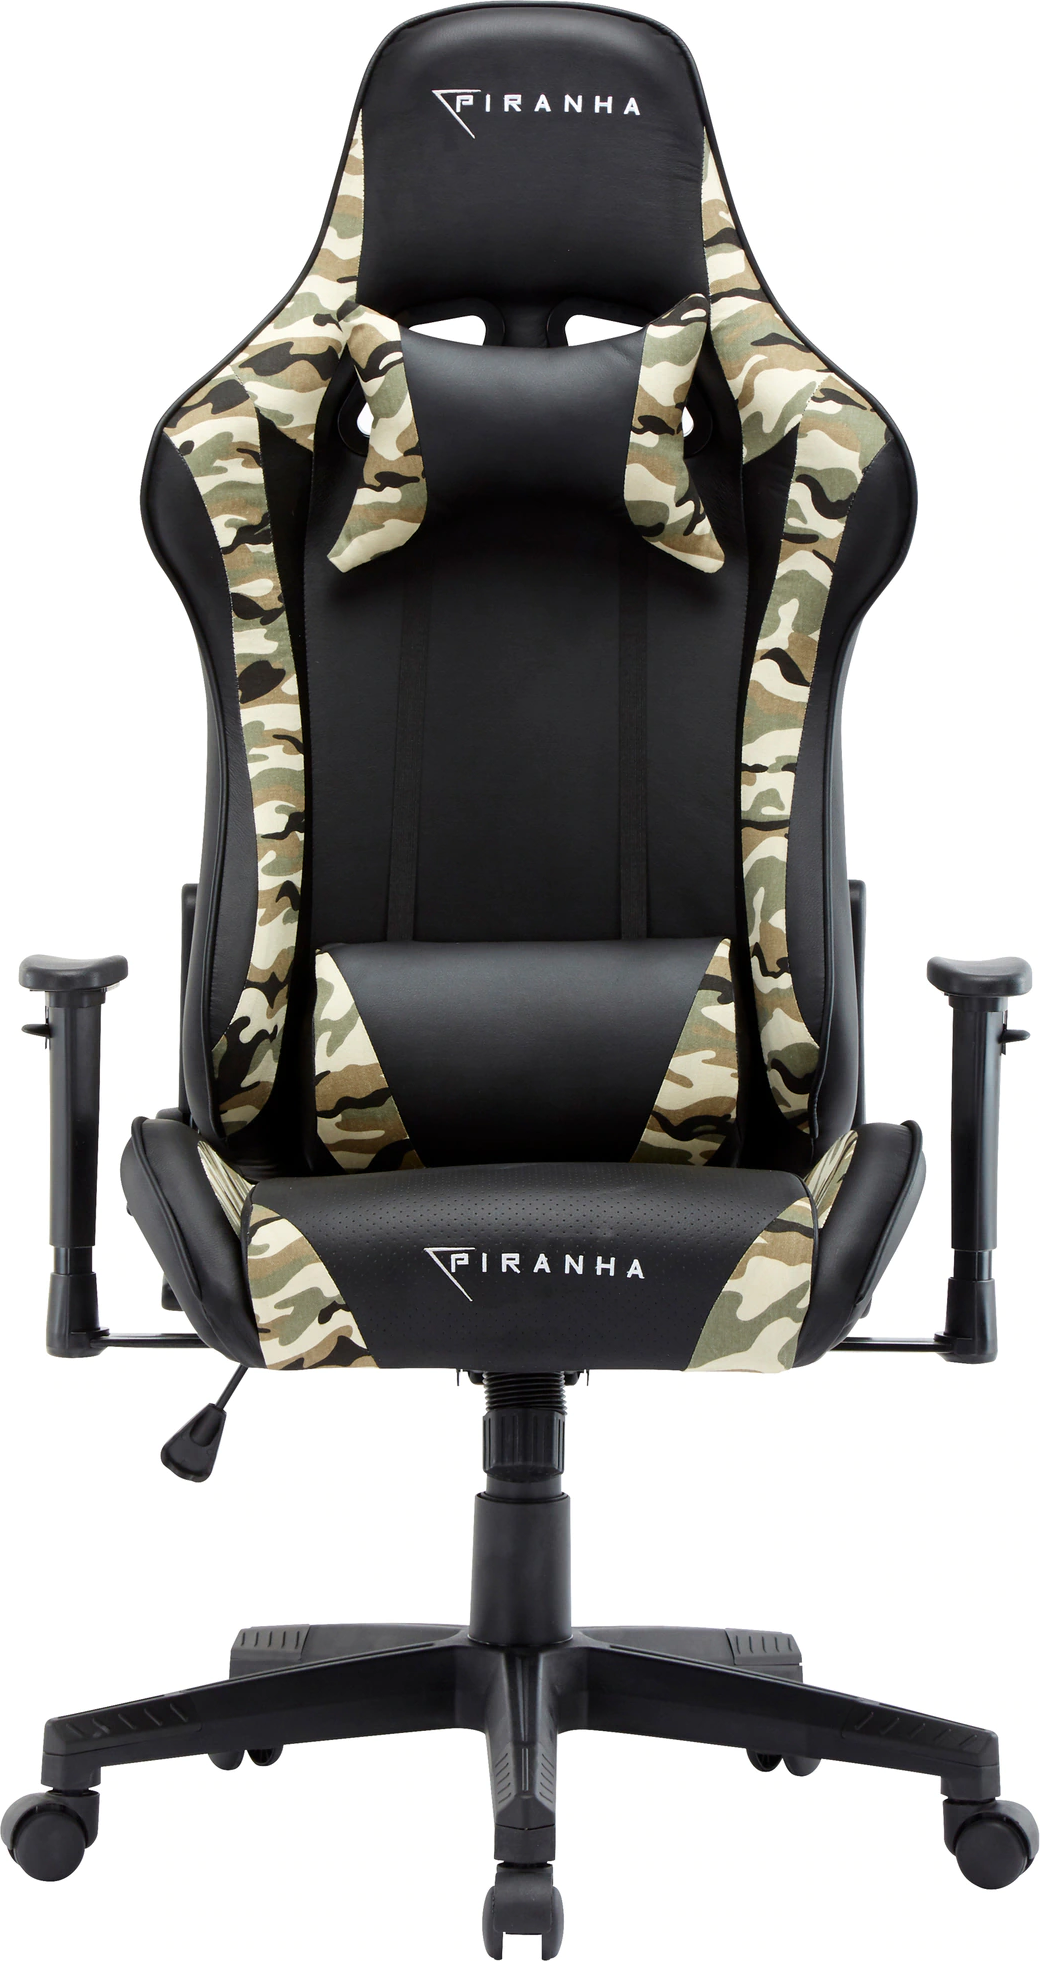  Bild på Piranha Bite Gaming Chair - Black/Grey Camo gamingstol